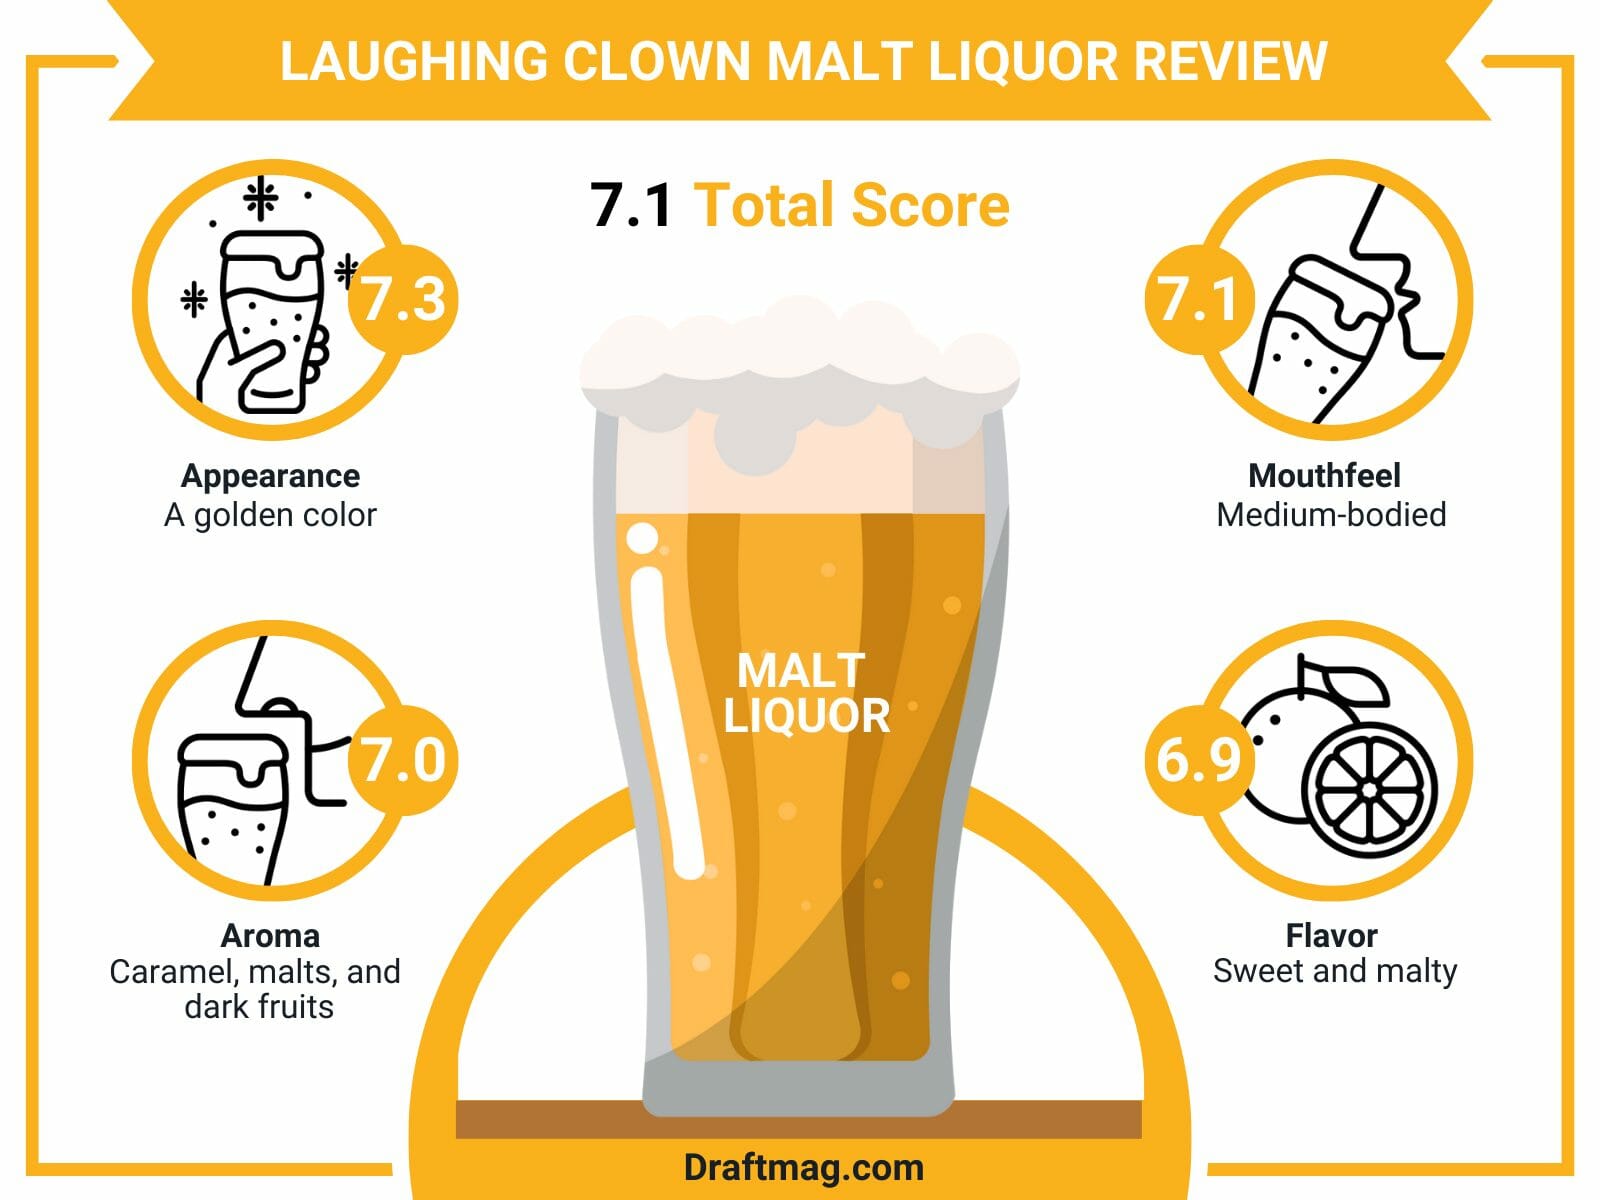 Laughing clown malt liquor review infographic